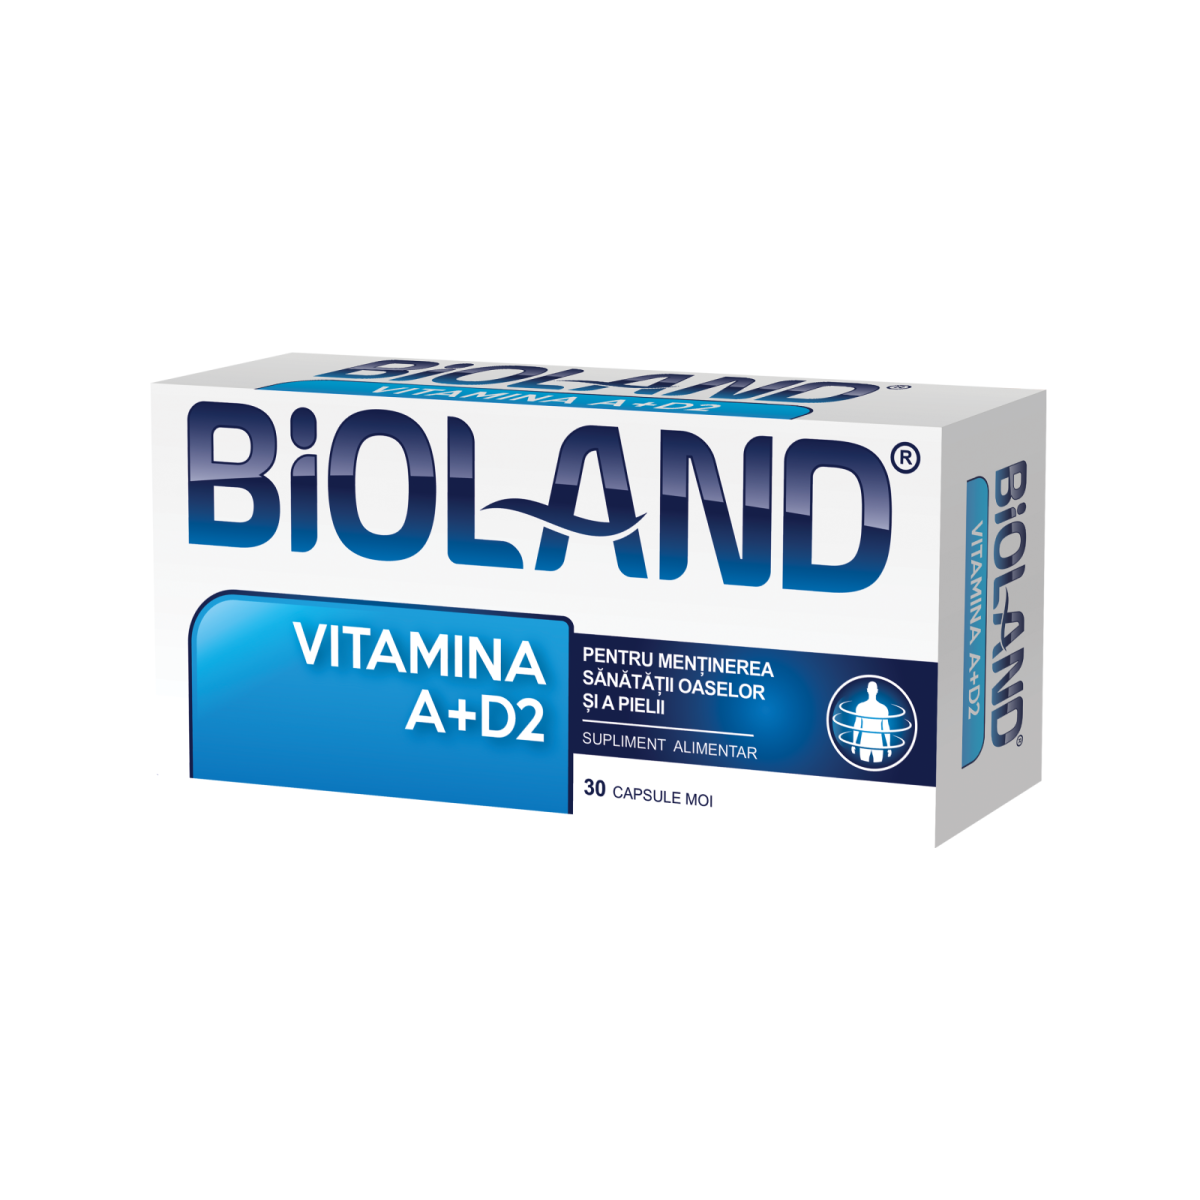 Vitamina A si D2, 30 capsule, Biofarm